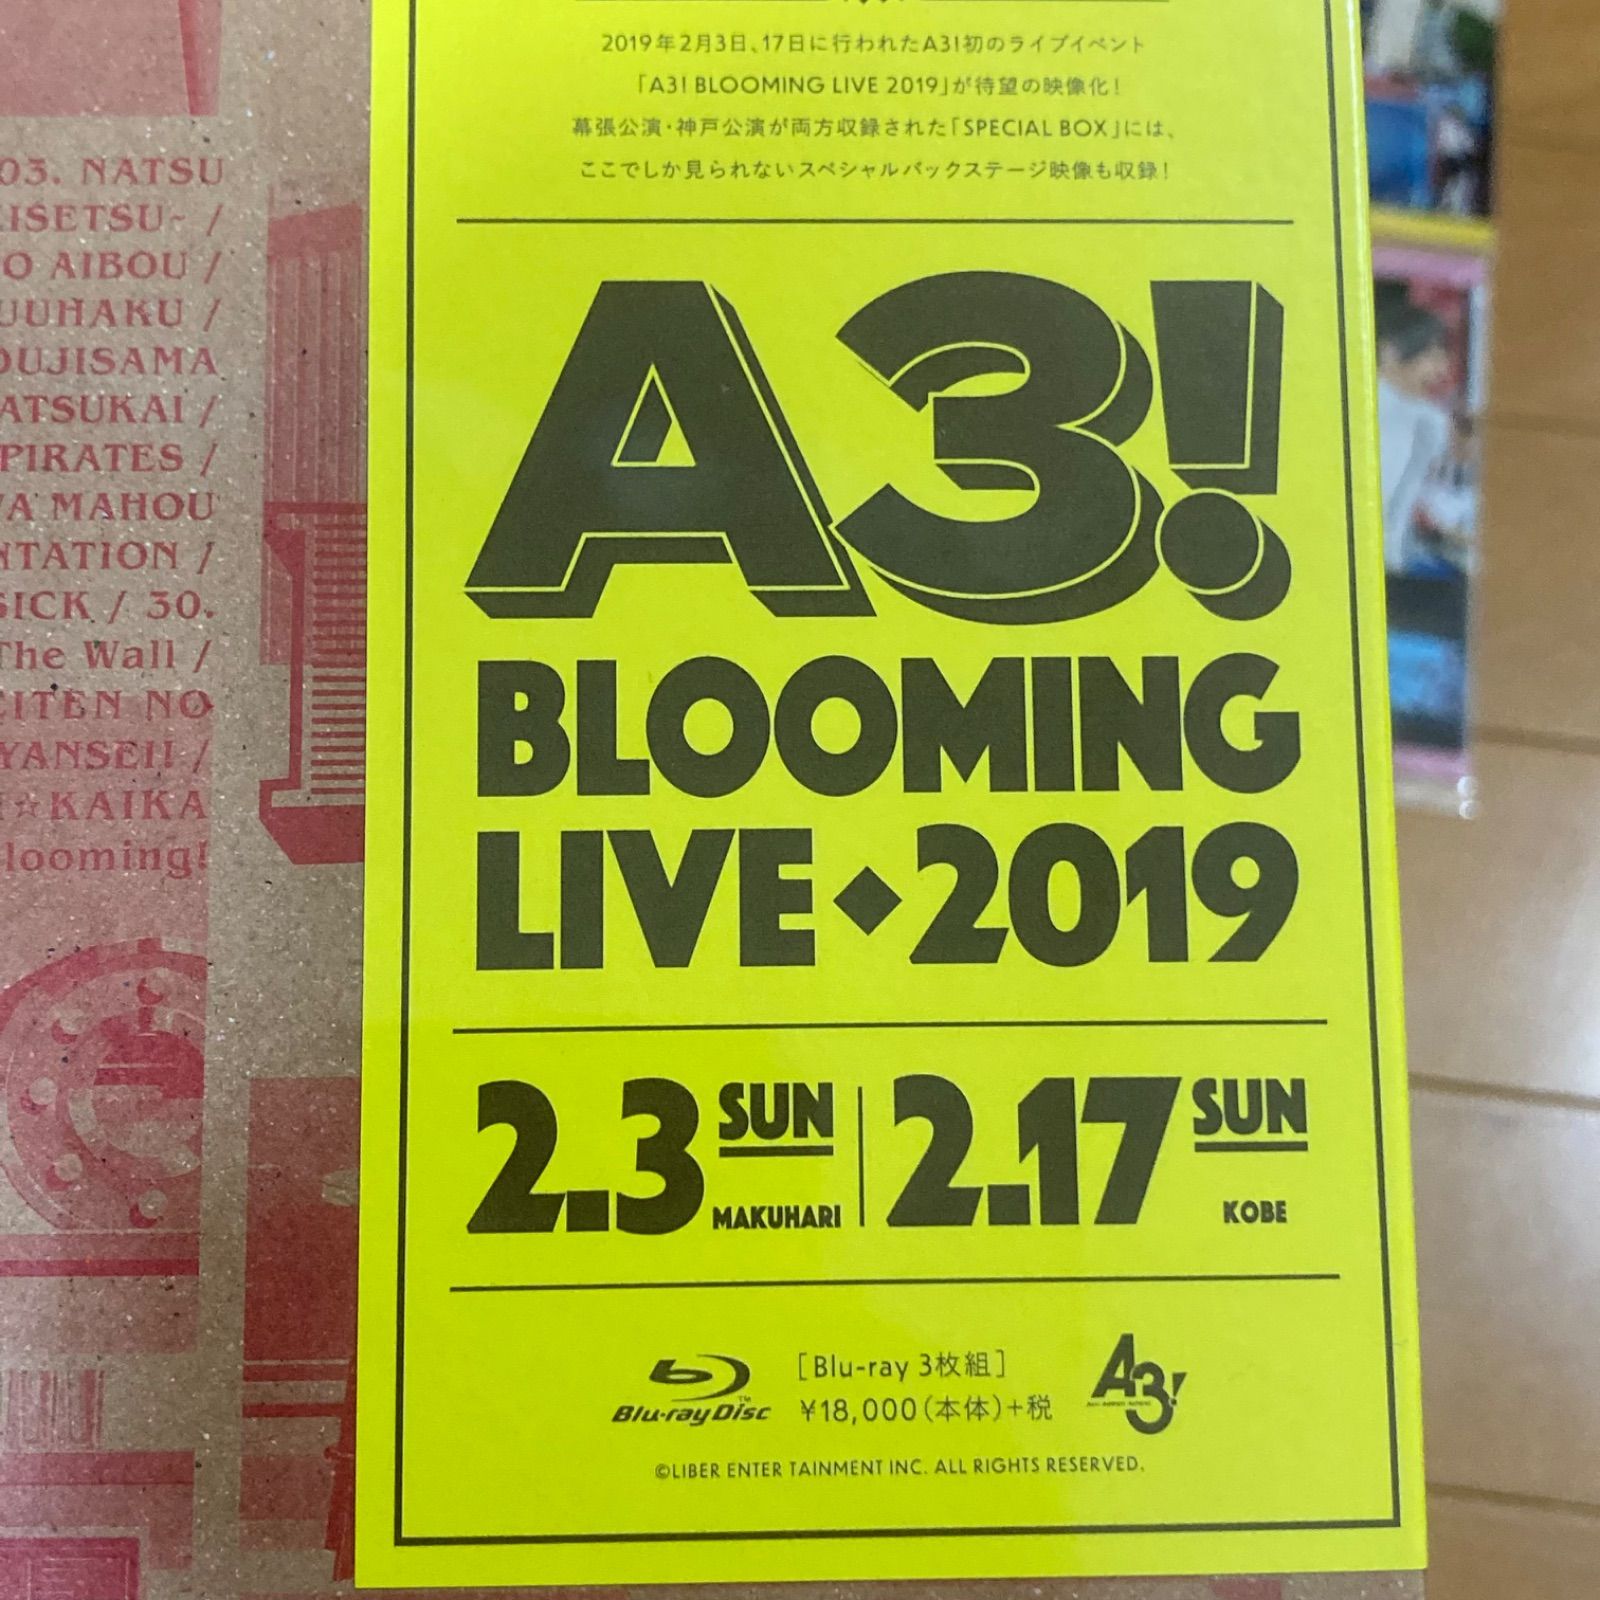 A3! BLOOMING LIVE 2019 SPECIAL BOX ブルーレイ - メルカリ